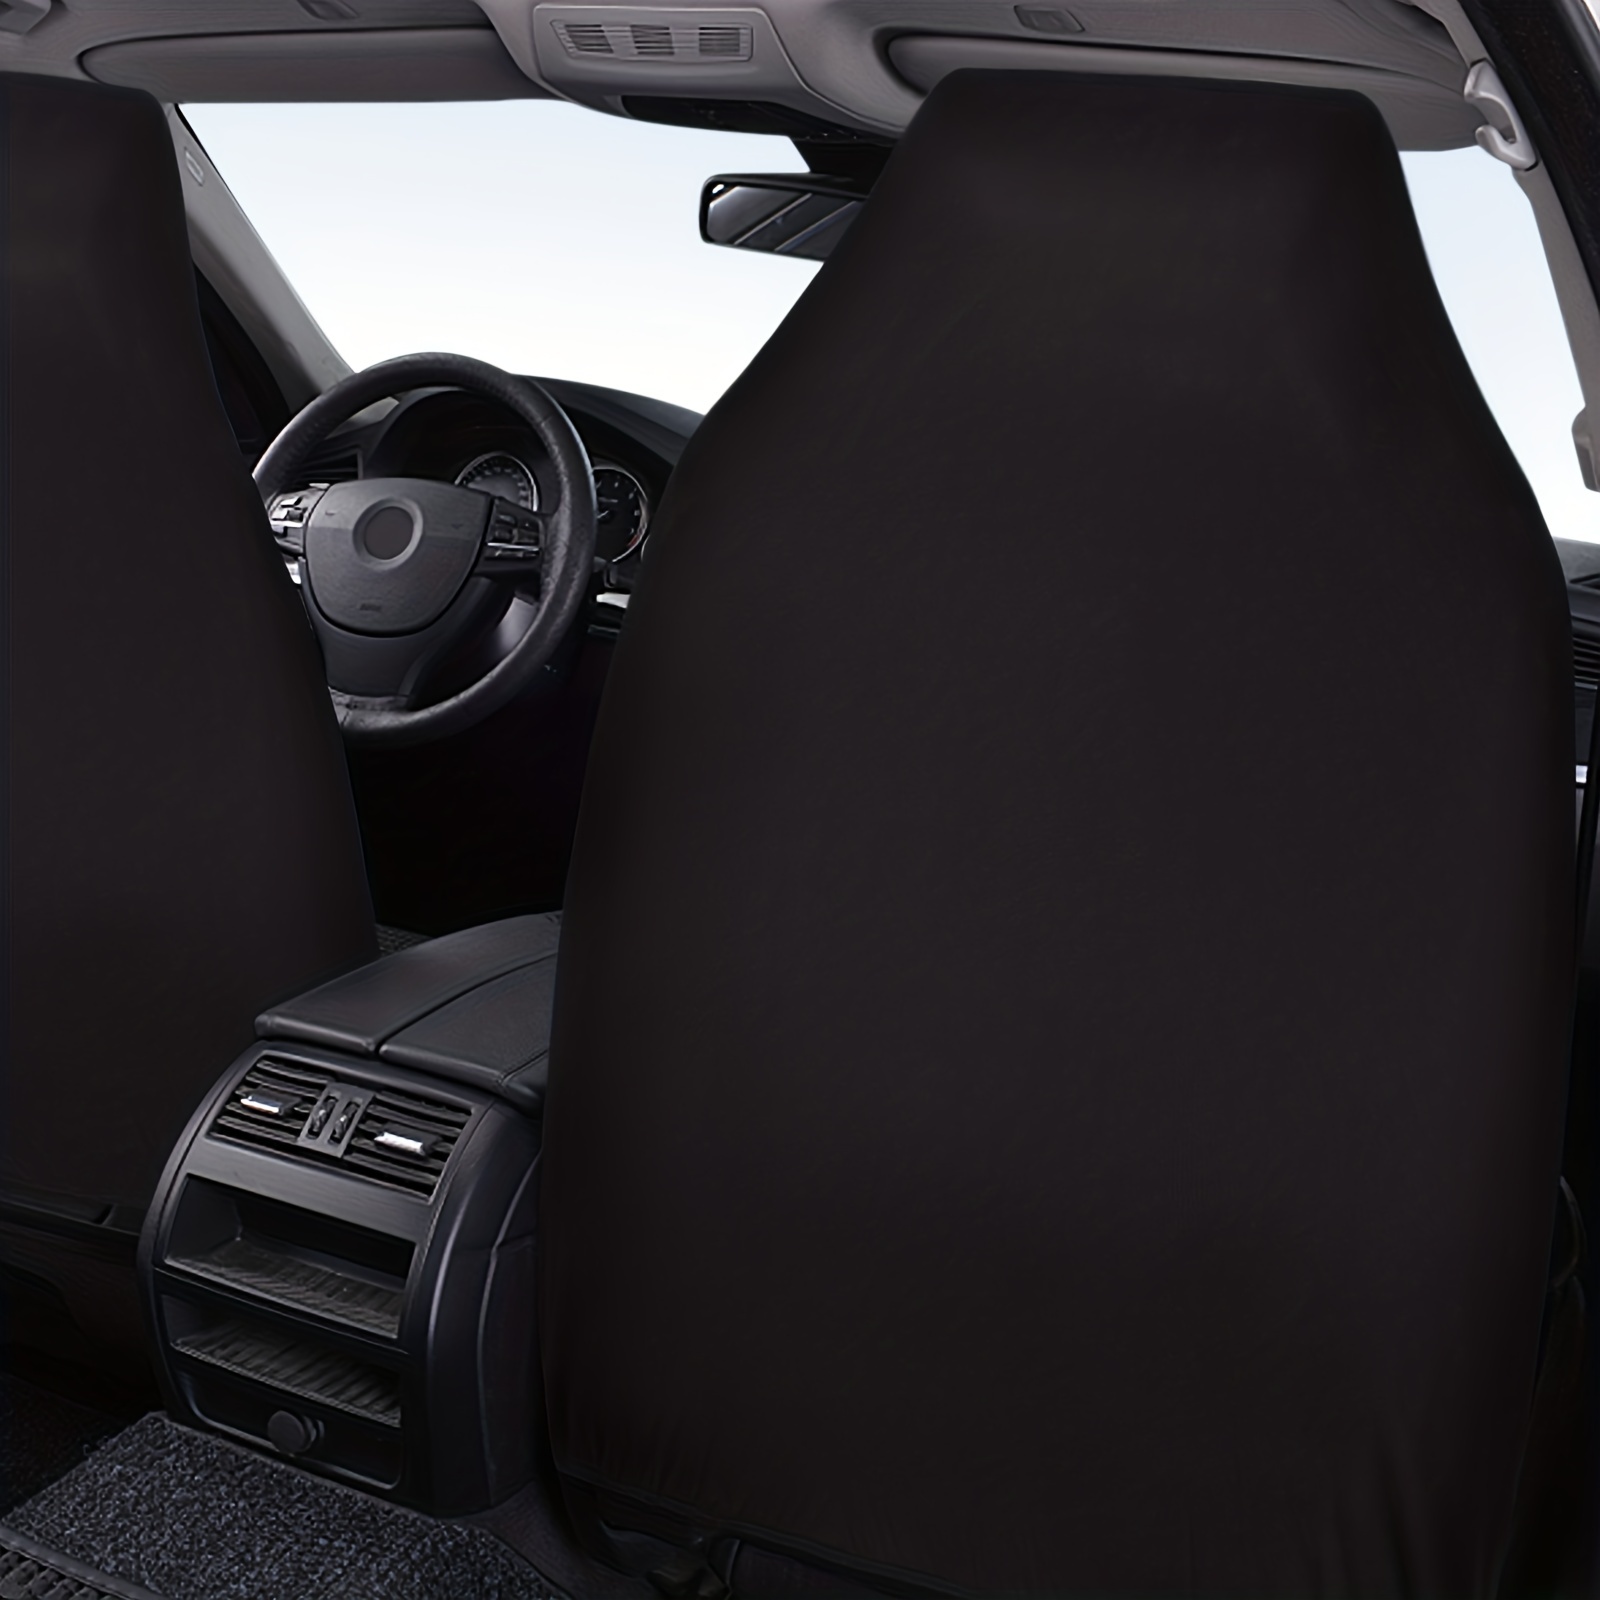 Coole Tigerdruck Auto Wohnmobil Einzelsitz Fahrersitz Universal Sitzbezug